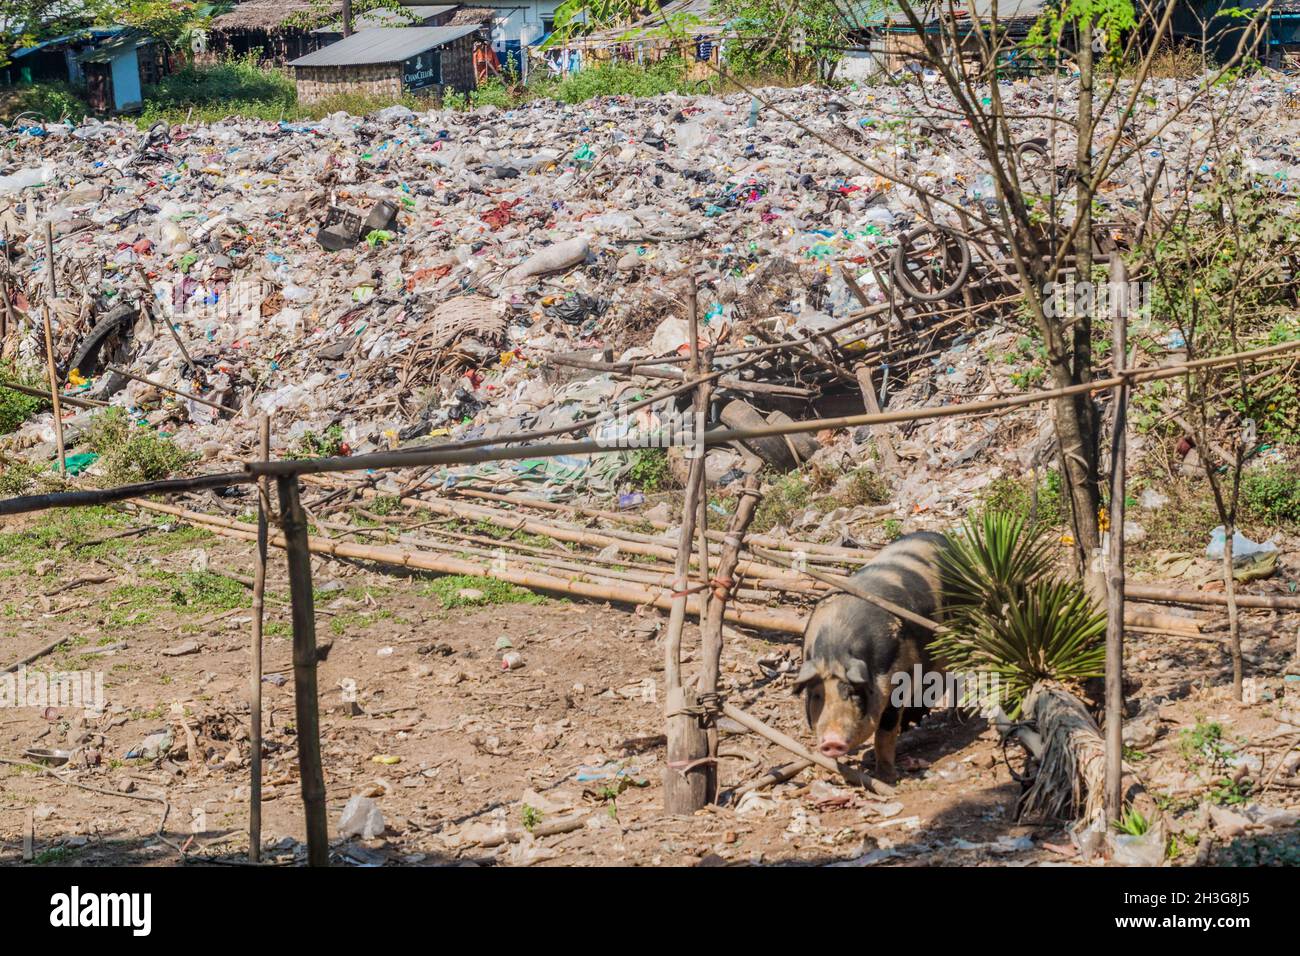 Rubbish dump in Bago town, Myanmar Stock Photo